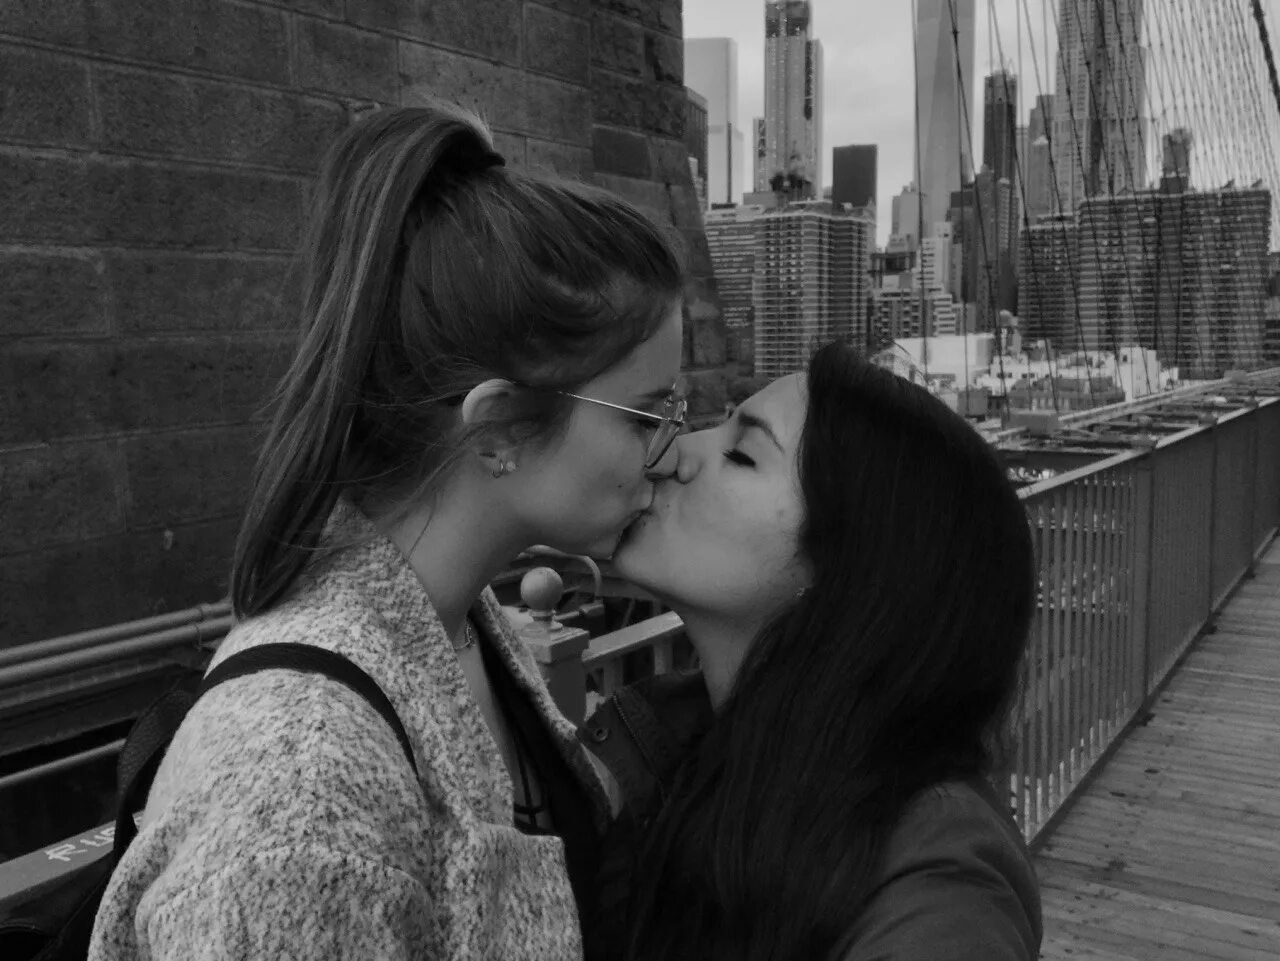 St lesbian. Поцелуй девушек. Девушки целуются. Поцелуй девушки с девушкой. Поцелуй двух девушек.